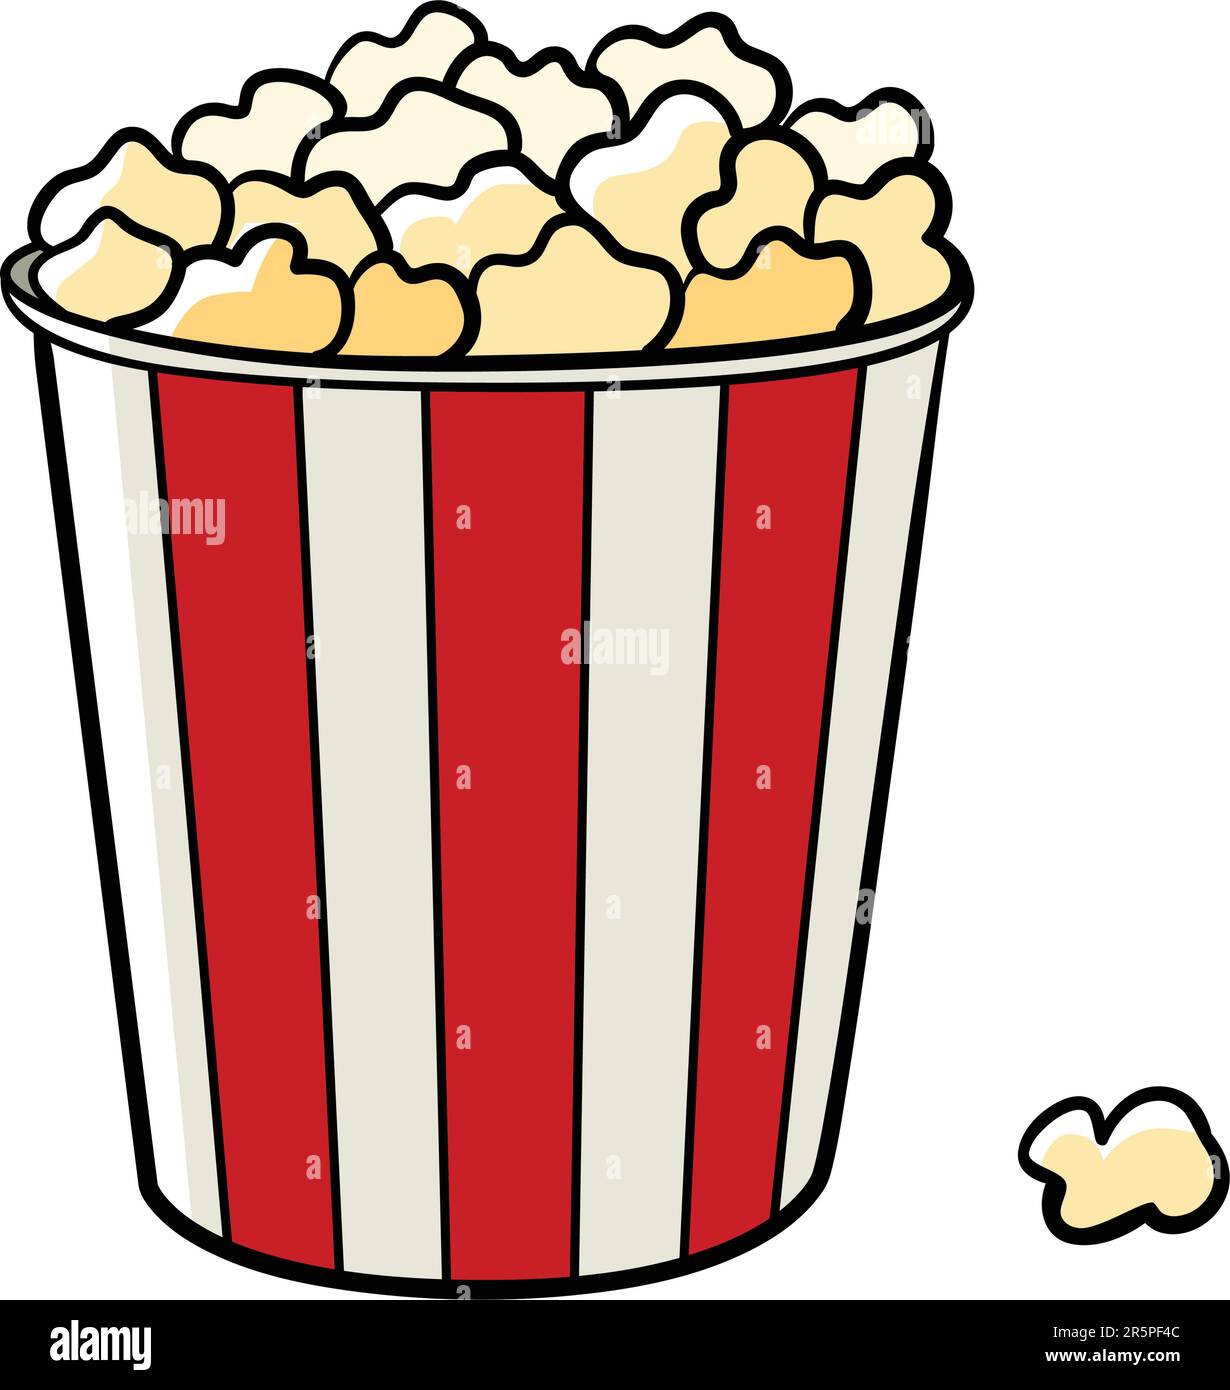 Cartoon-Illustration eines Eimers aus Popcorn Stock Vektor